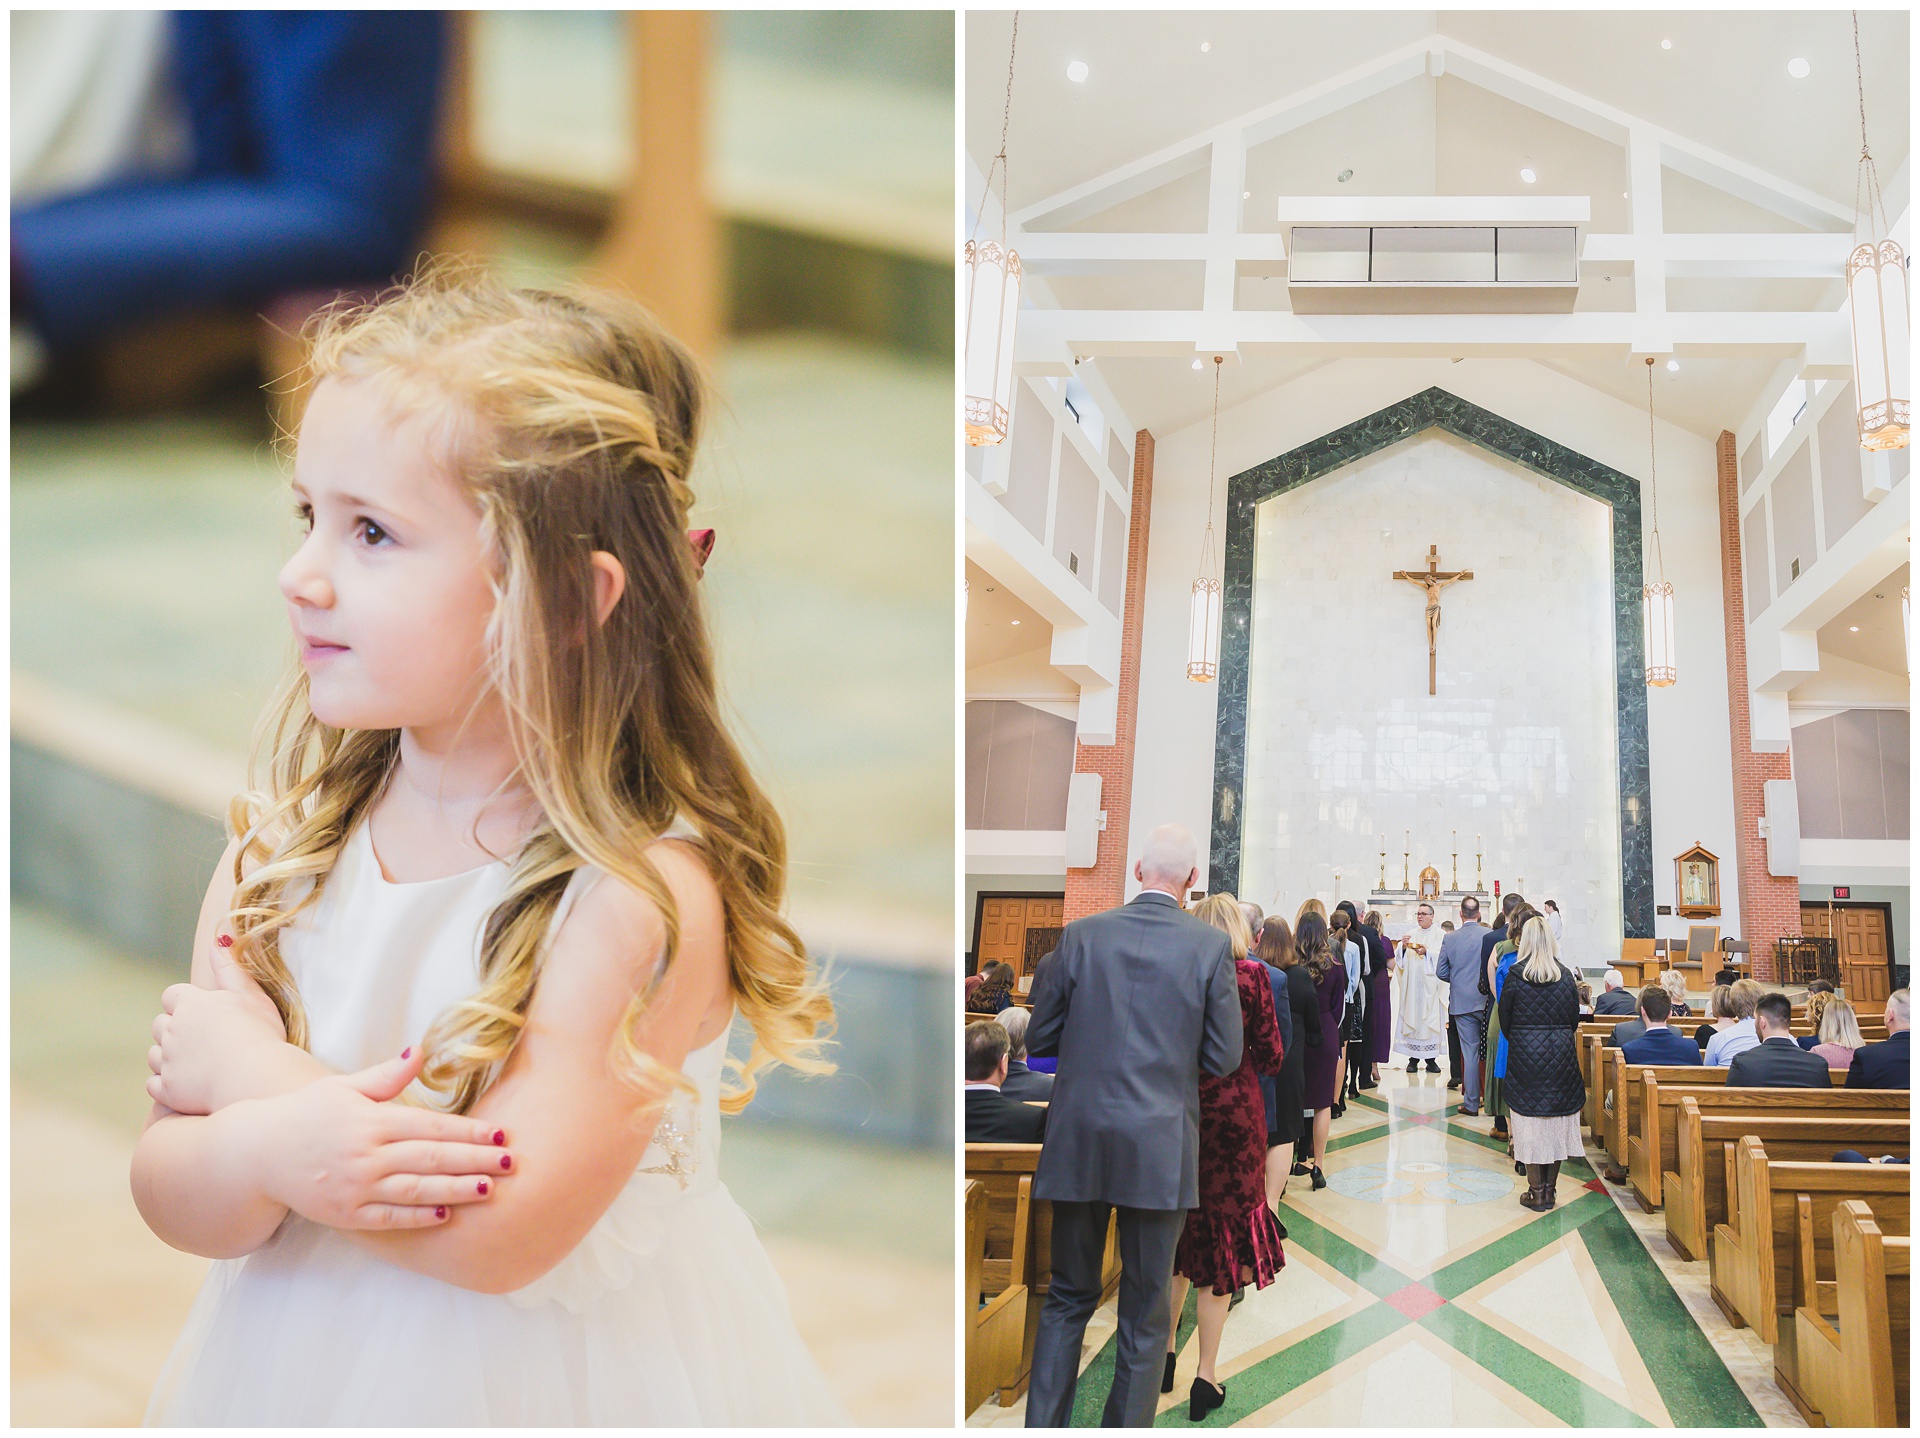 Wedding photography at Prince of Peace Catholic Church by Kansas City wedding photographers Wisdom-Watson Weddings.